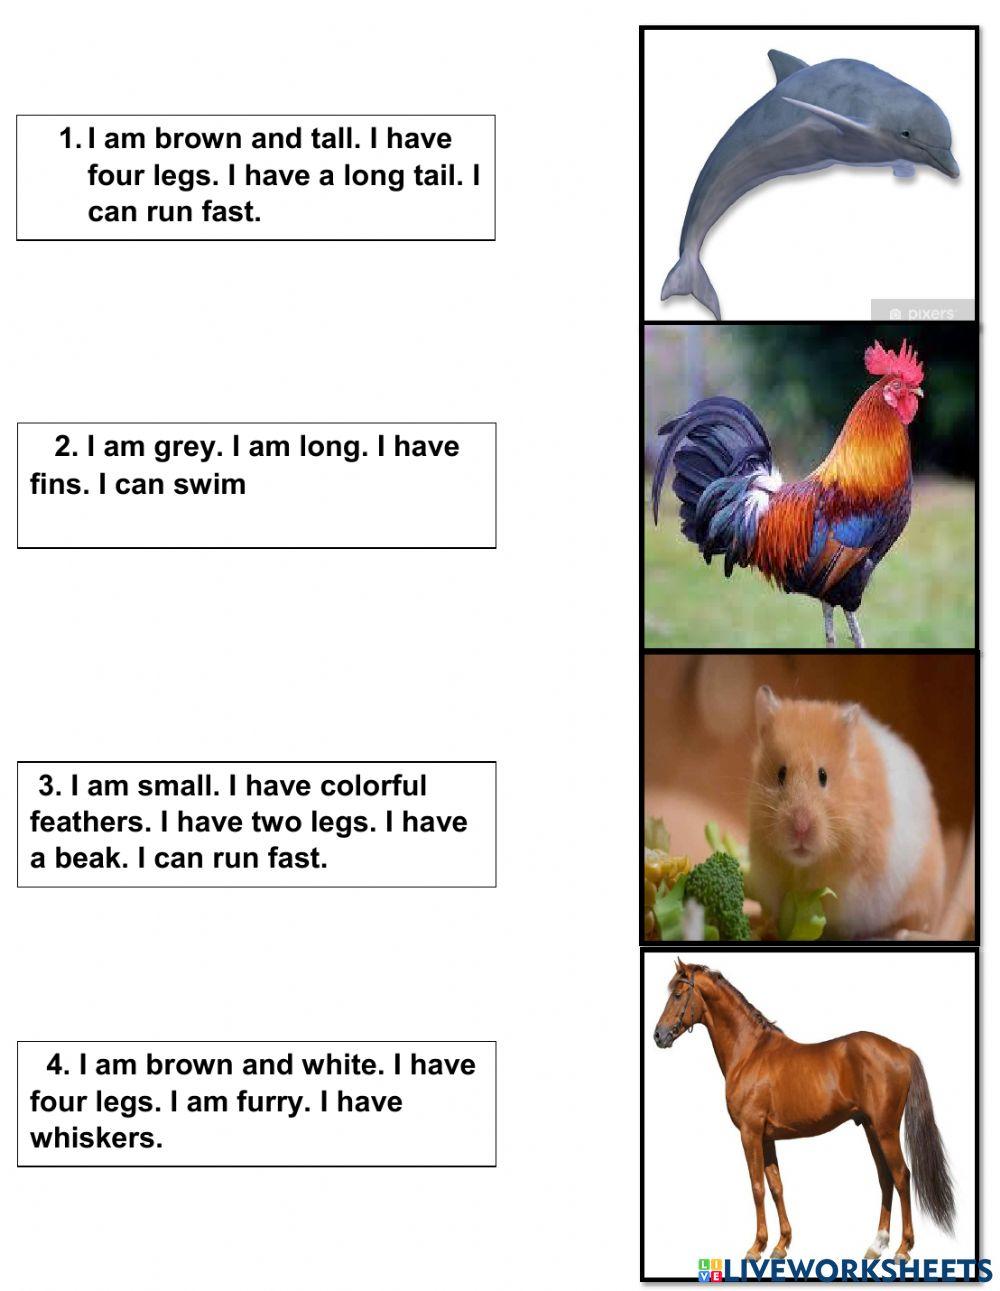 Describing 4 animals